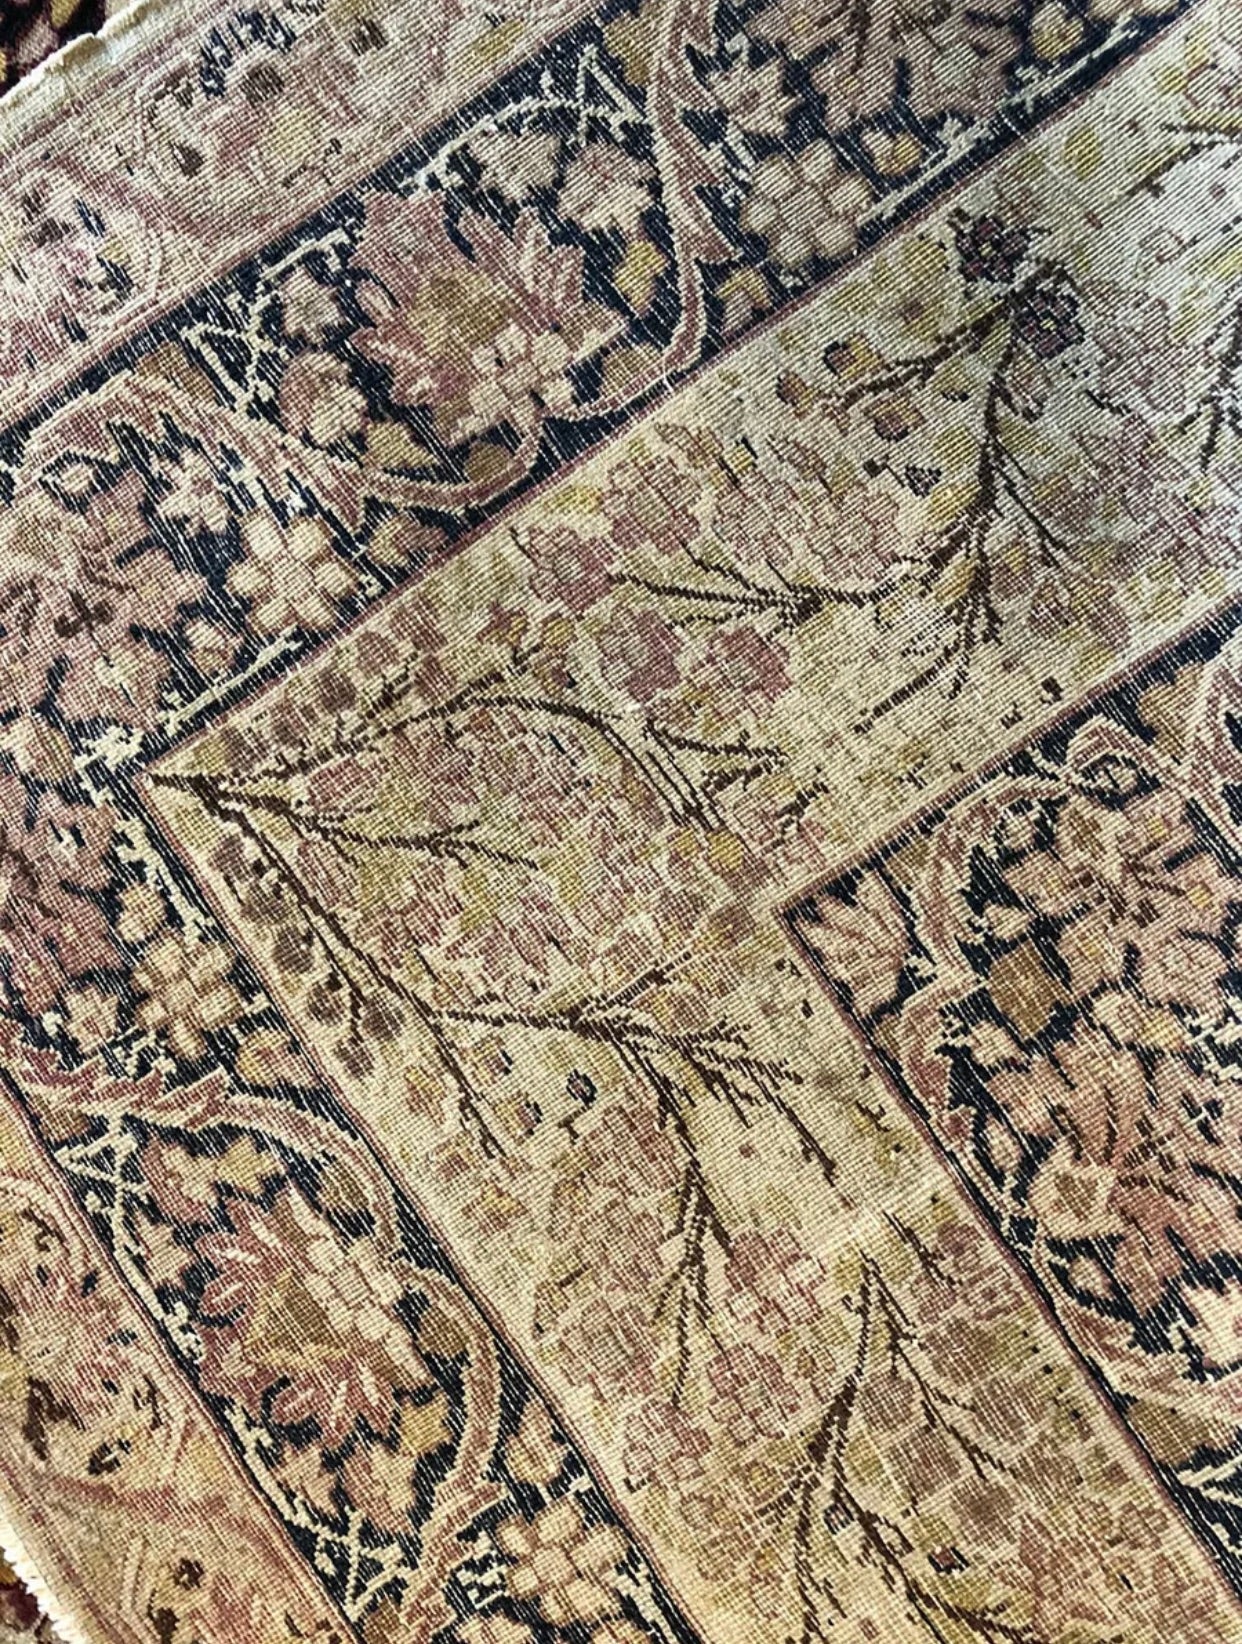 A Breathtaking Antique Black Ground Panel Design Persian Lavar Rug